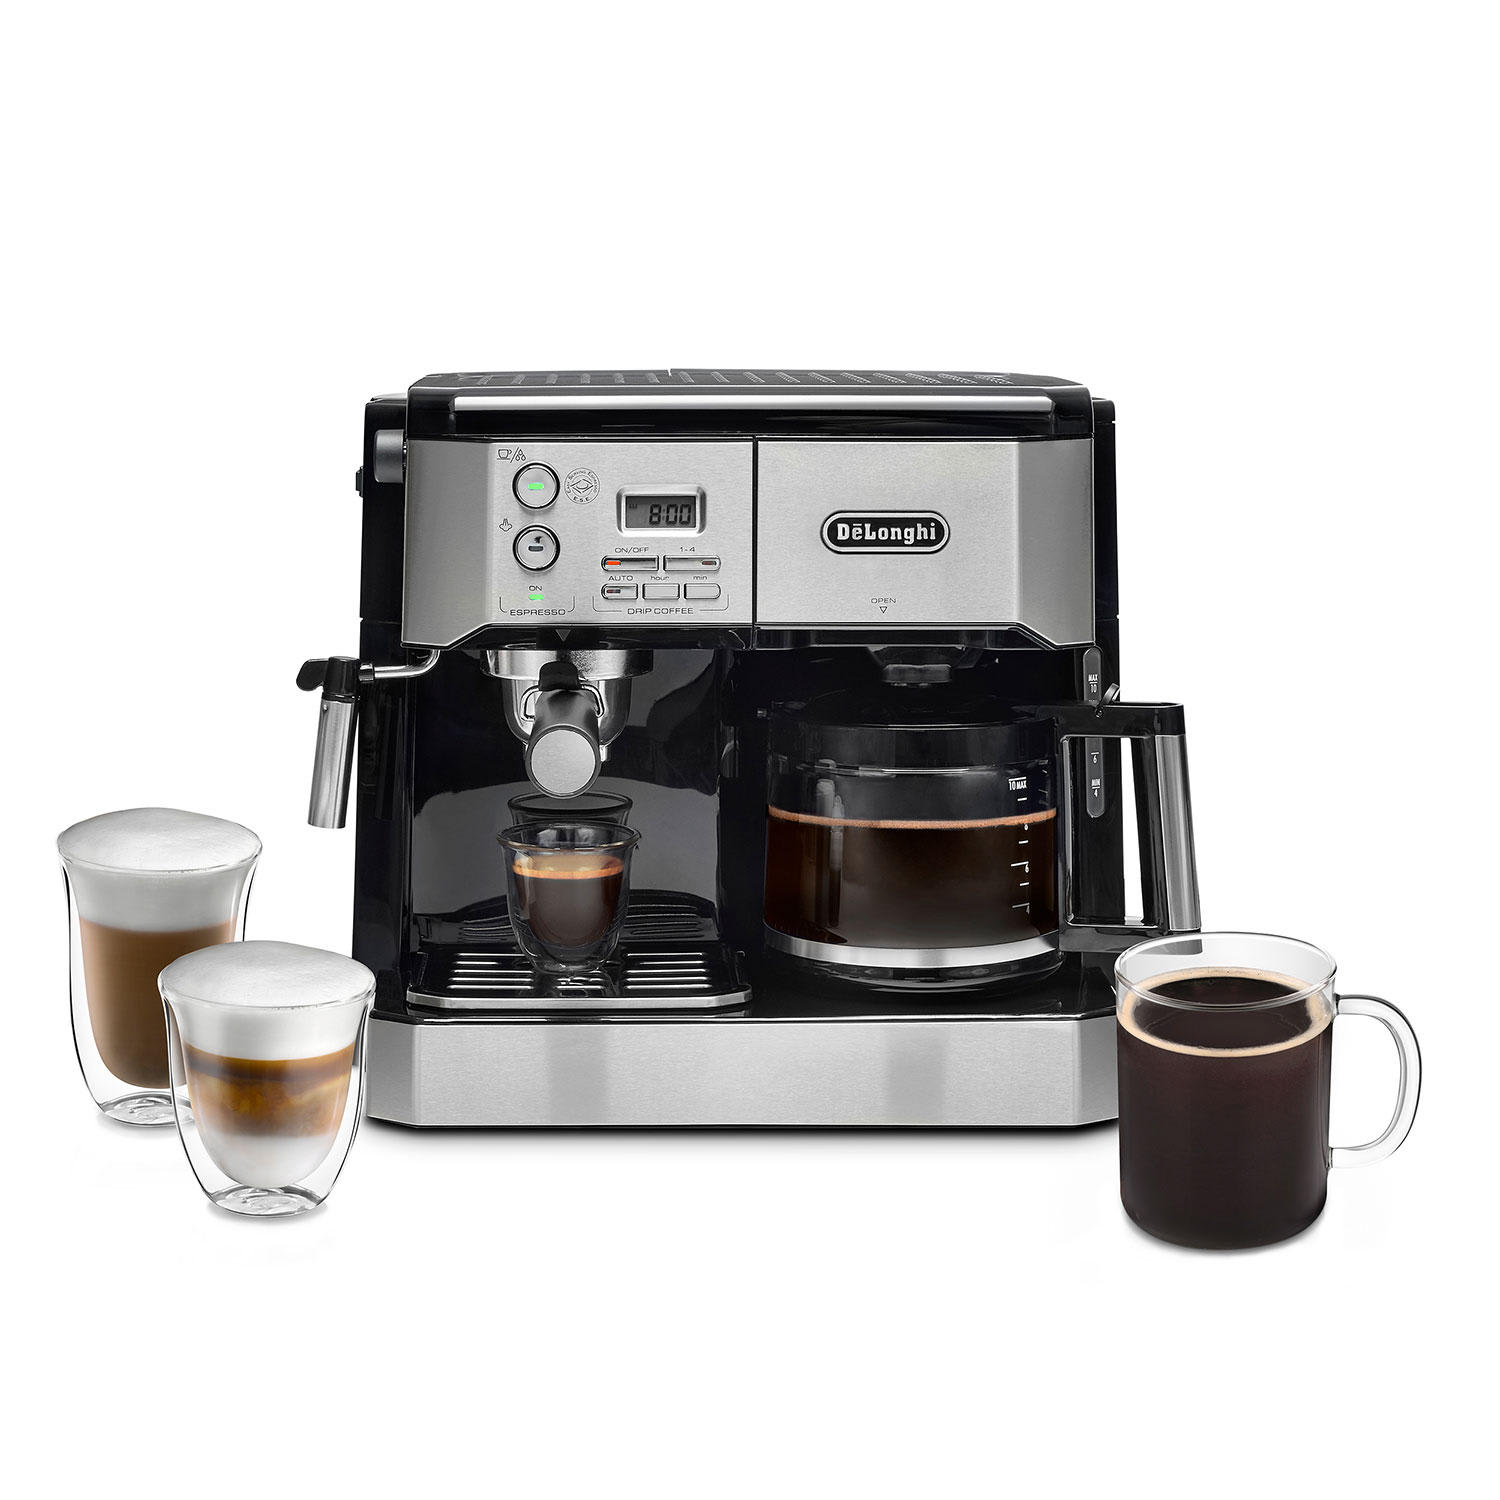 De'Longhi espresso and drip coffee machine